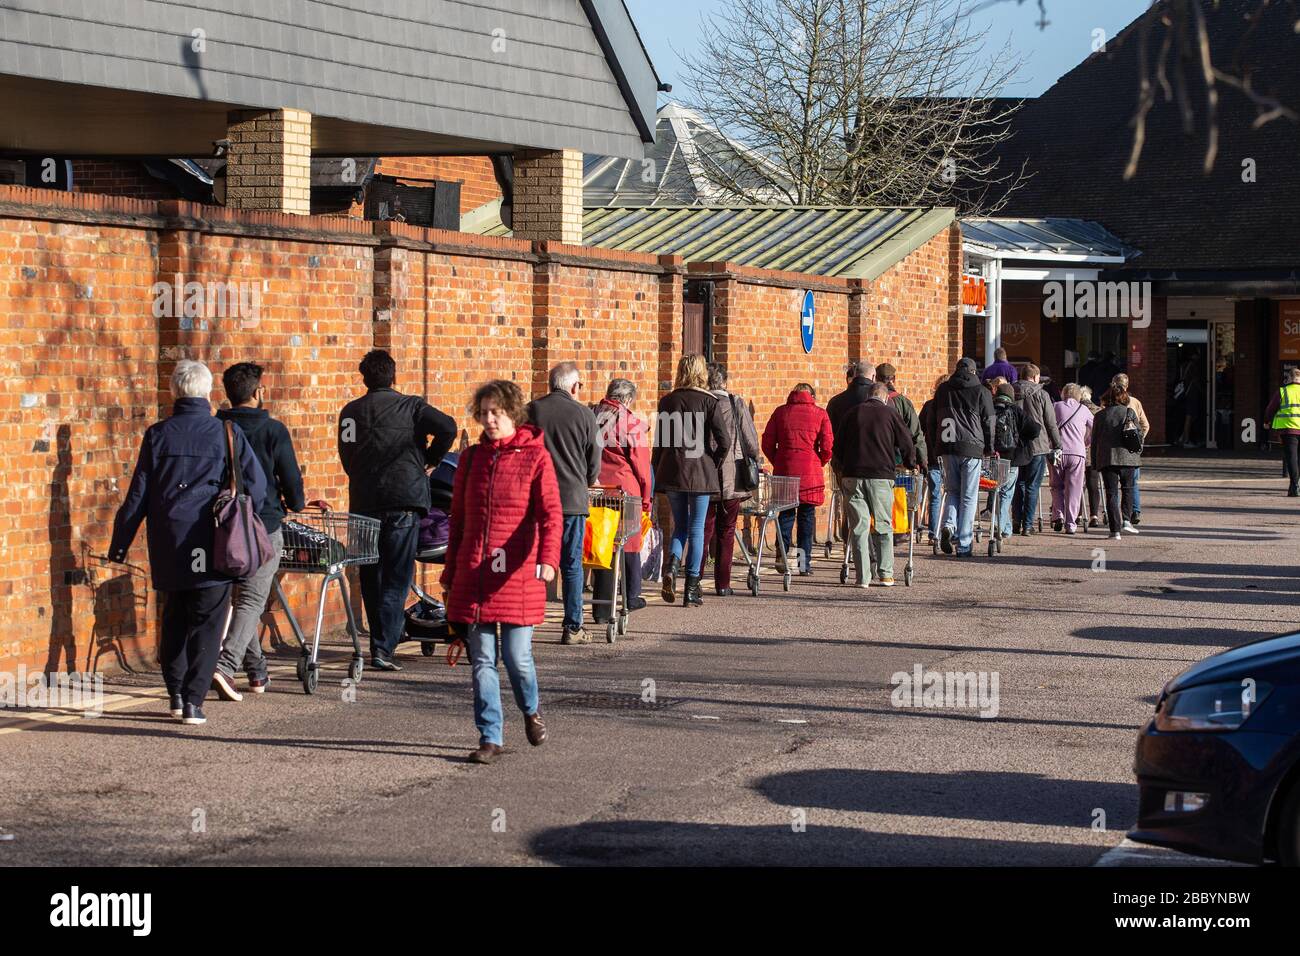 People queuing to enter supermarket during Coronavirus panic buying in UK March 2020 Stock Photo